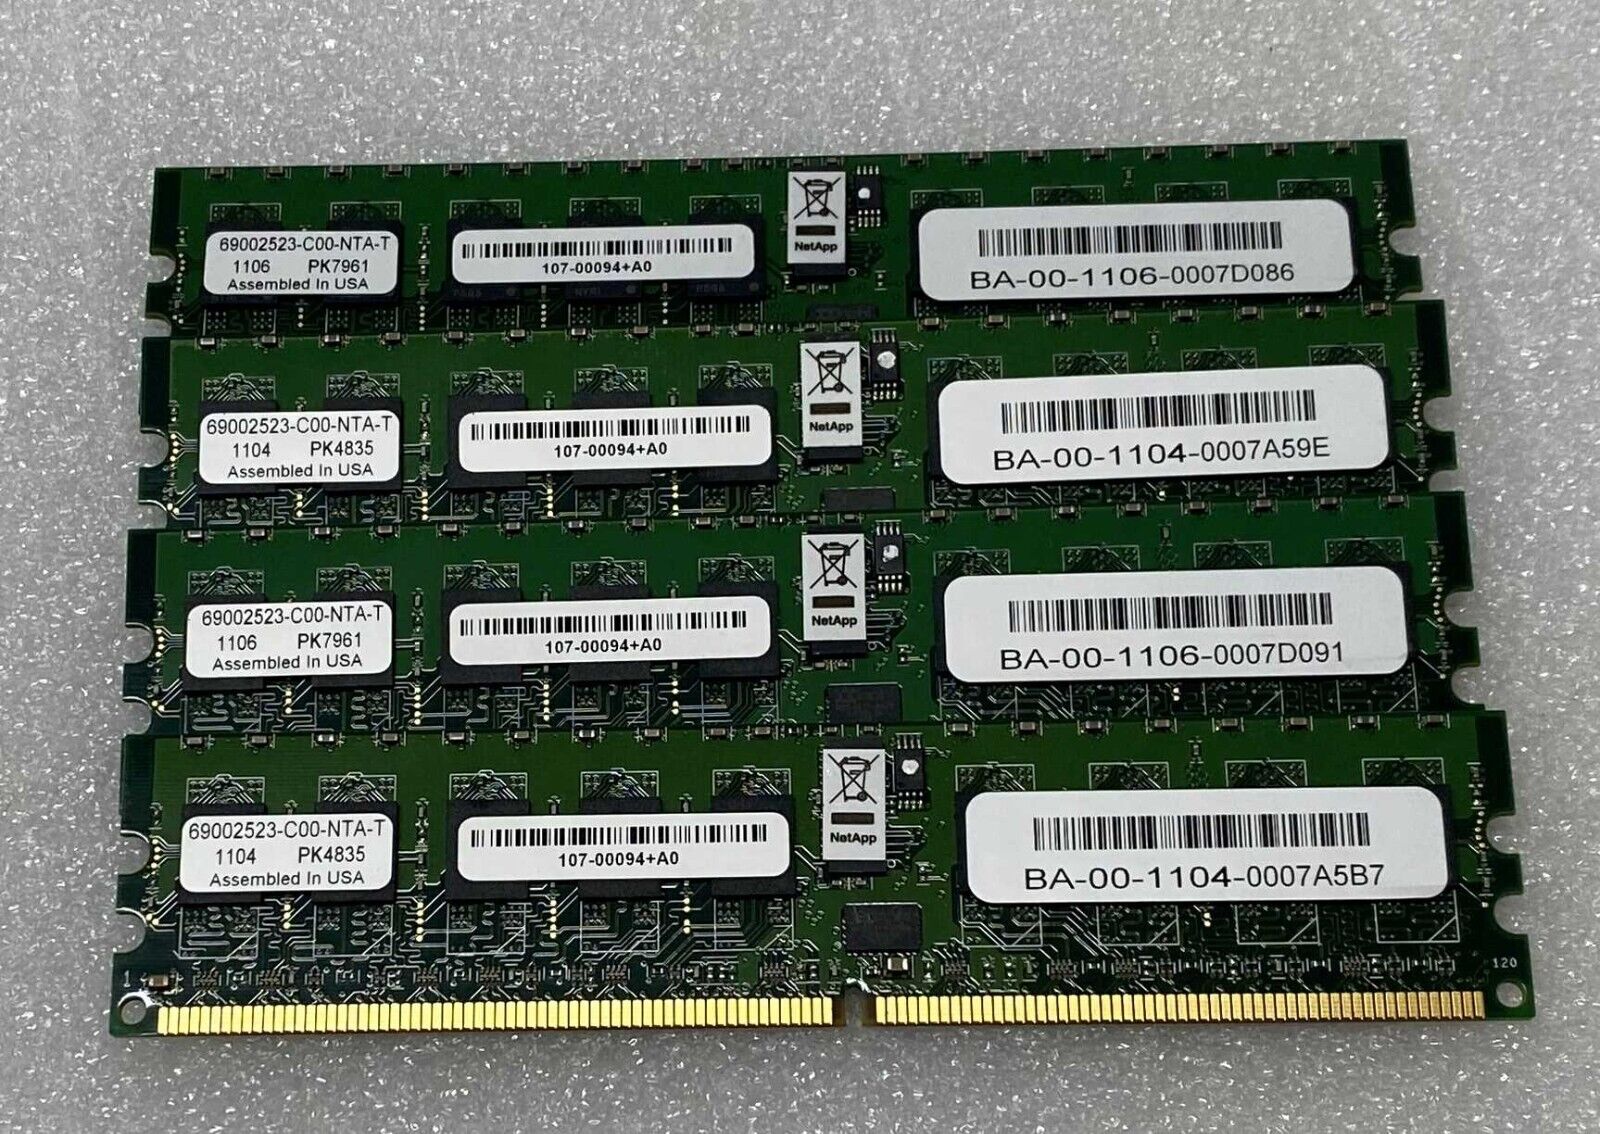 4x NETAPP 107-00094+A0 X3199-R6 2GB DIMM Memory Module for FAS3240 FAS3270 Filer